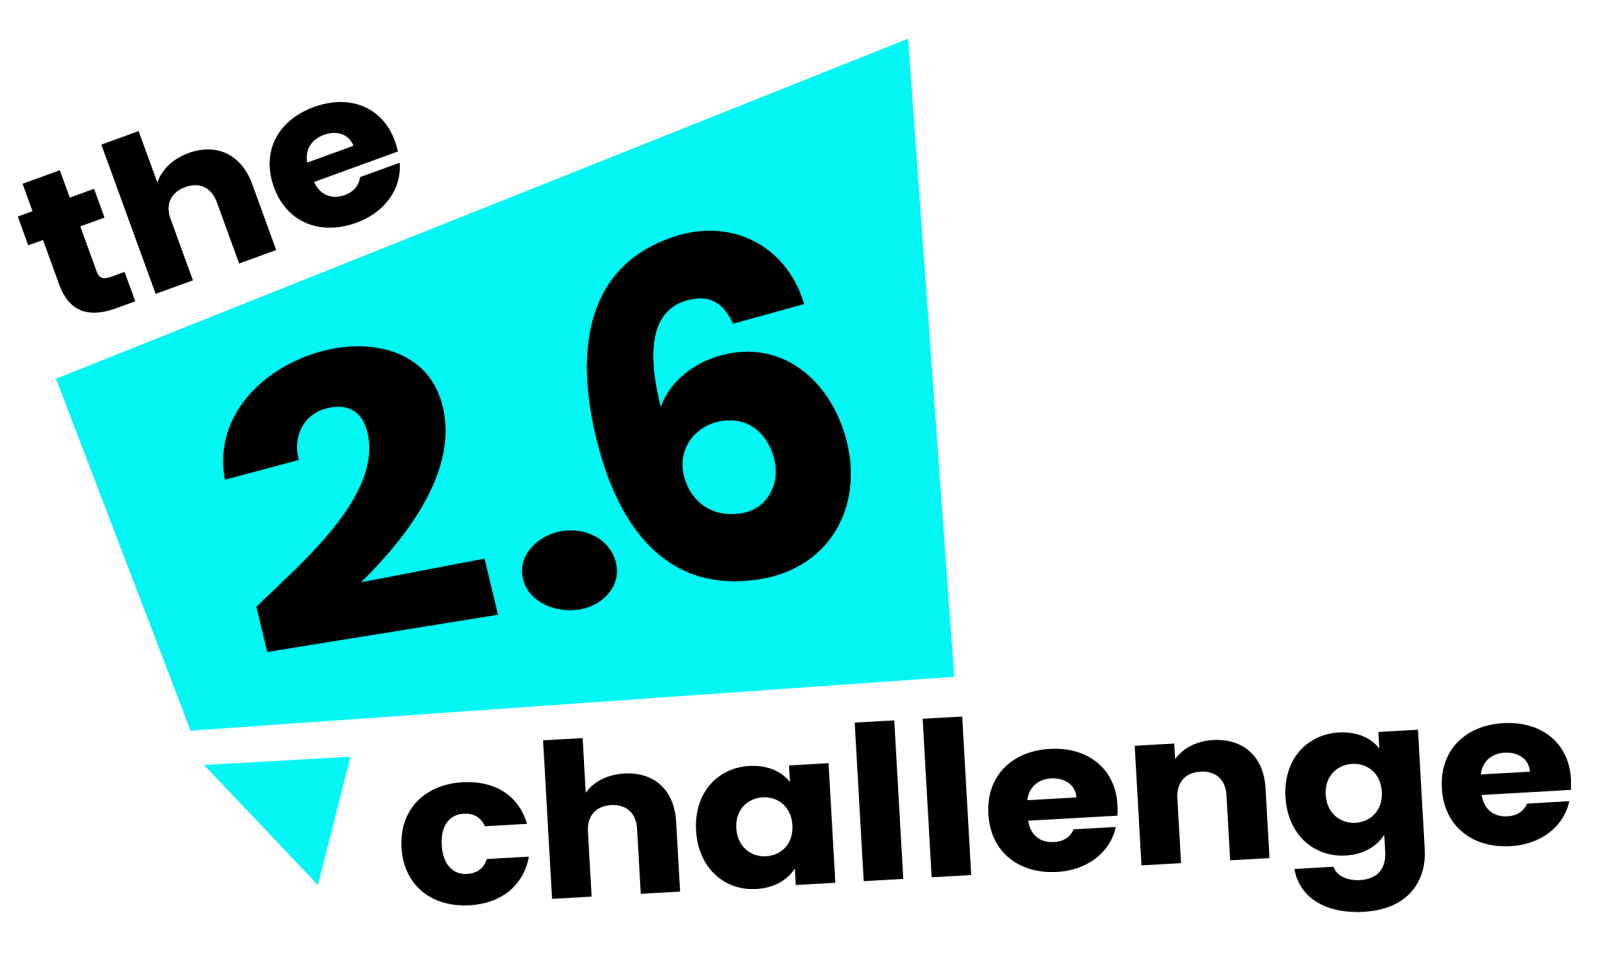 2.6 Challenger logo